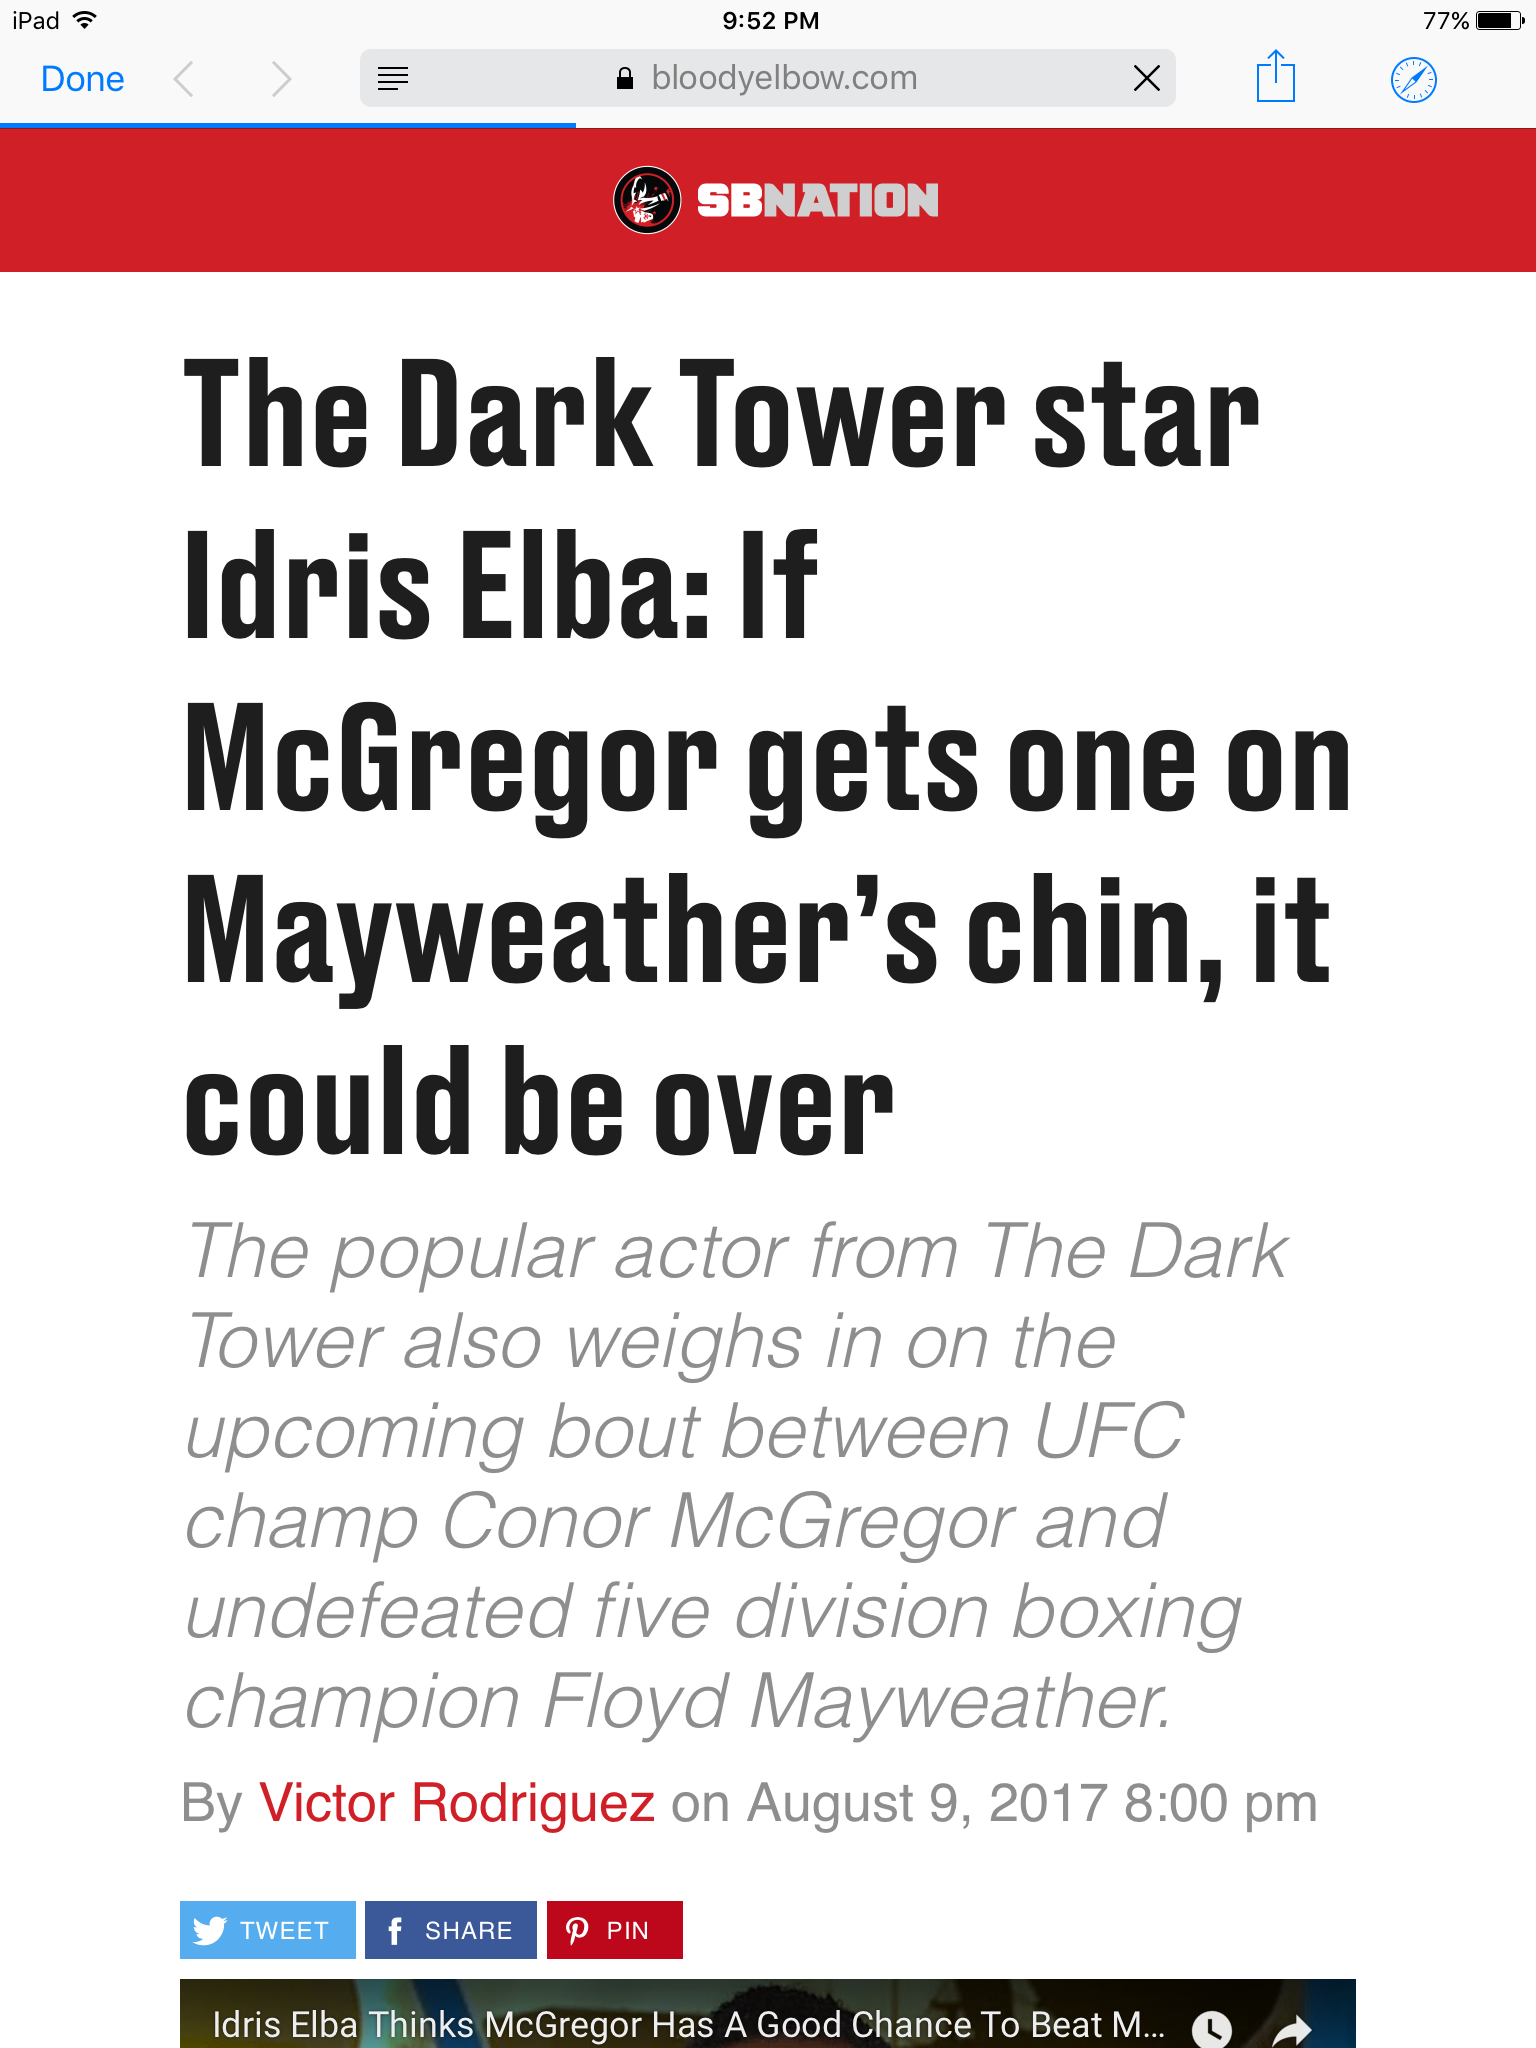 McGregor vs. mayweather hot take